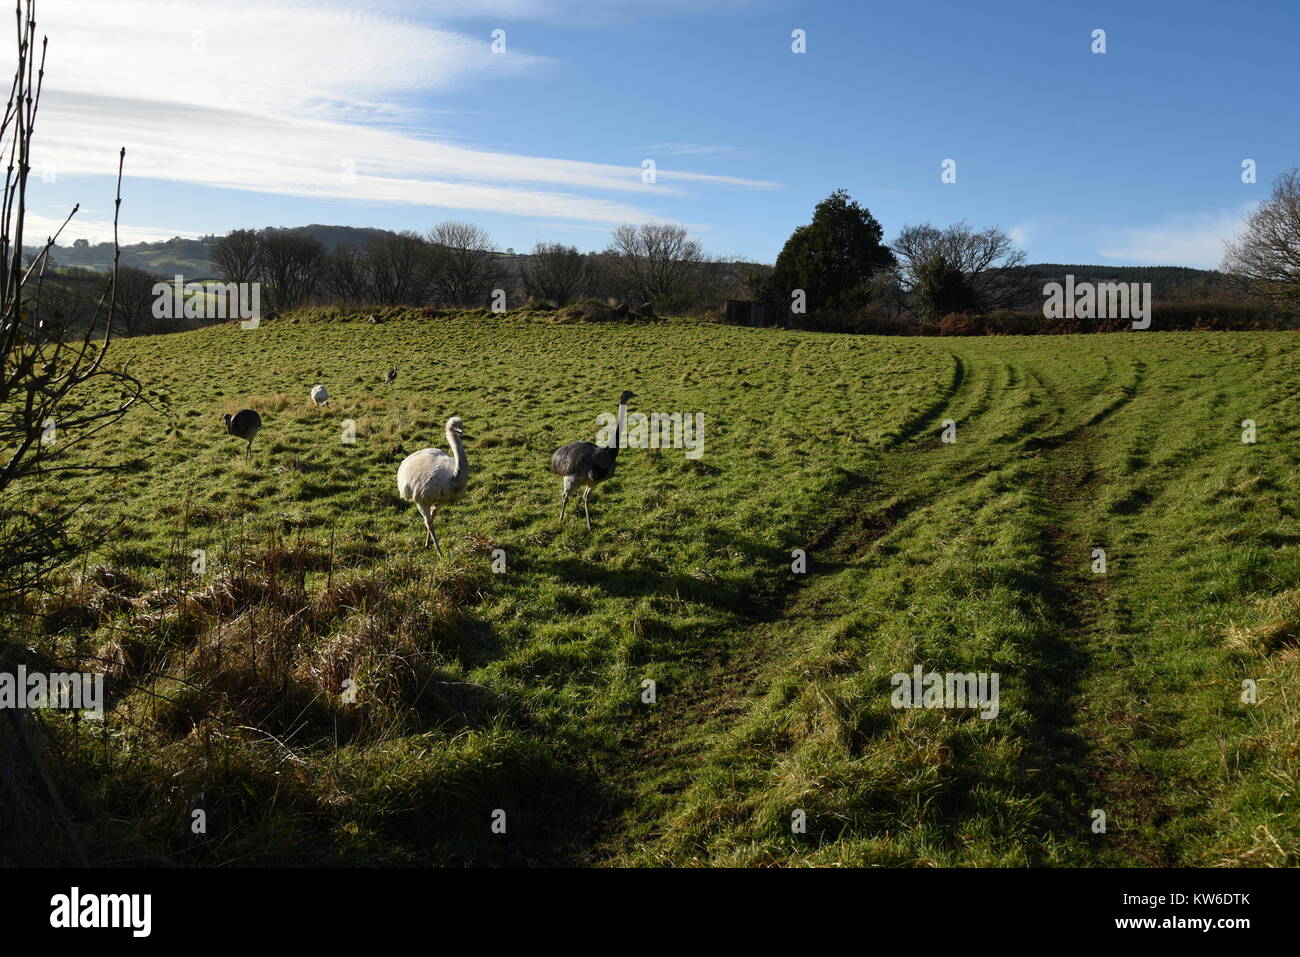 A group of rheas in a field, Devon, England Stock Photo